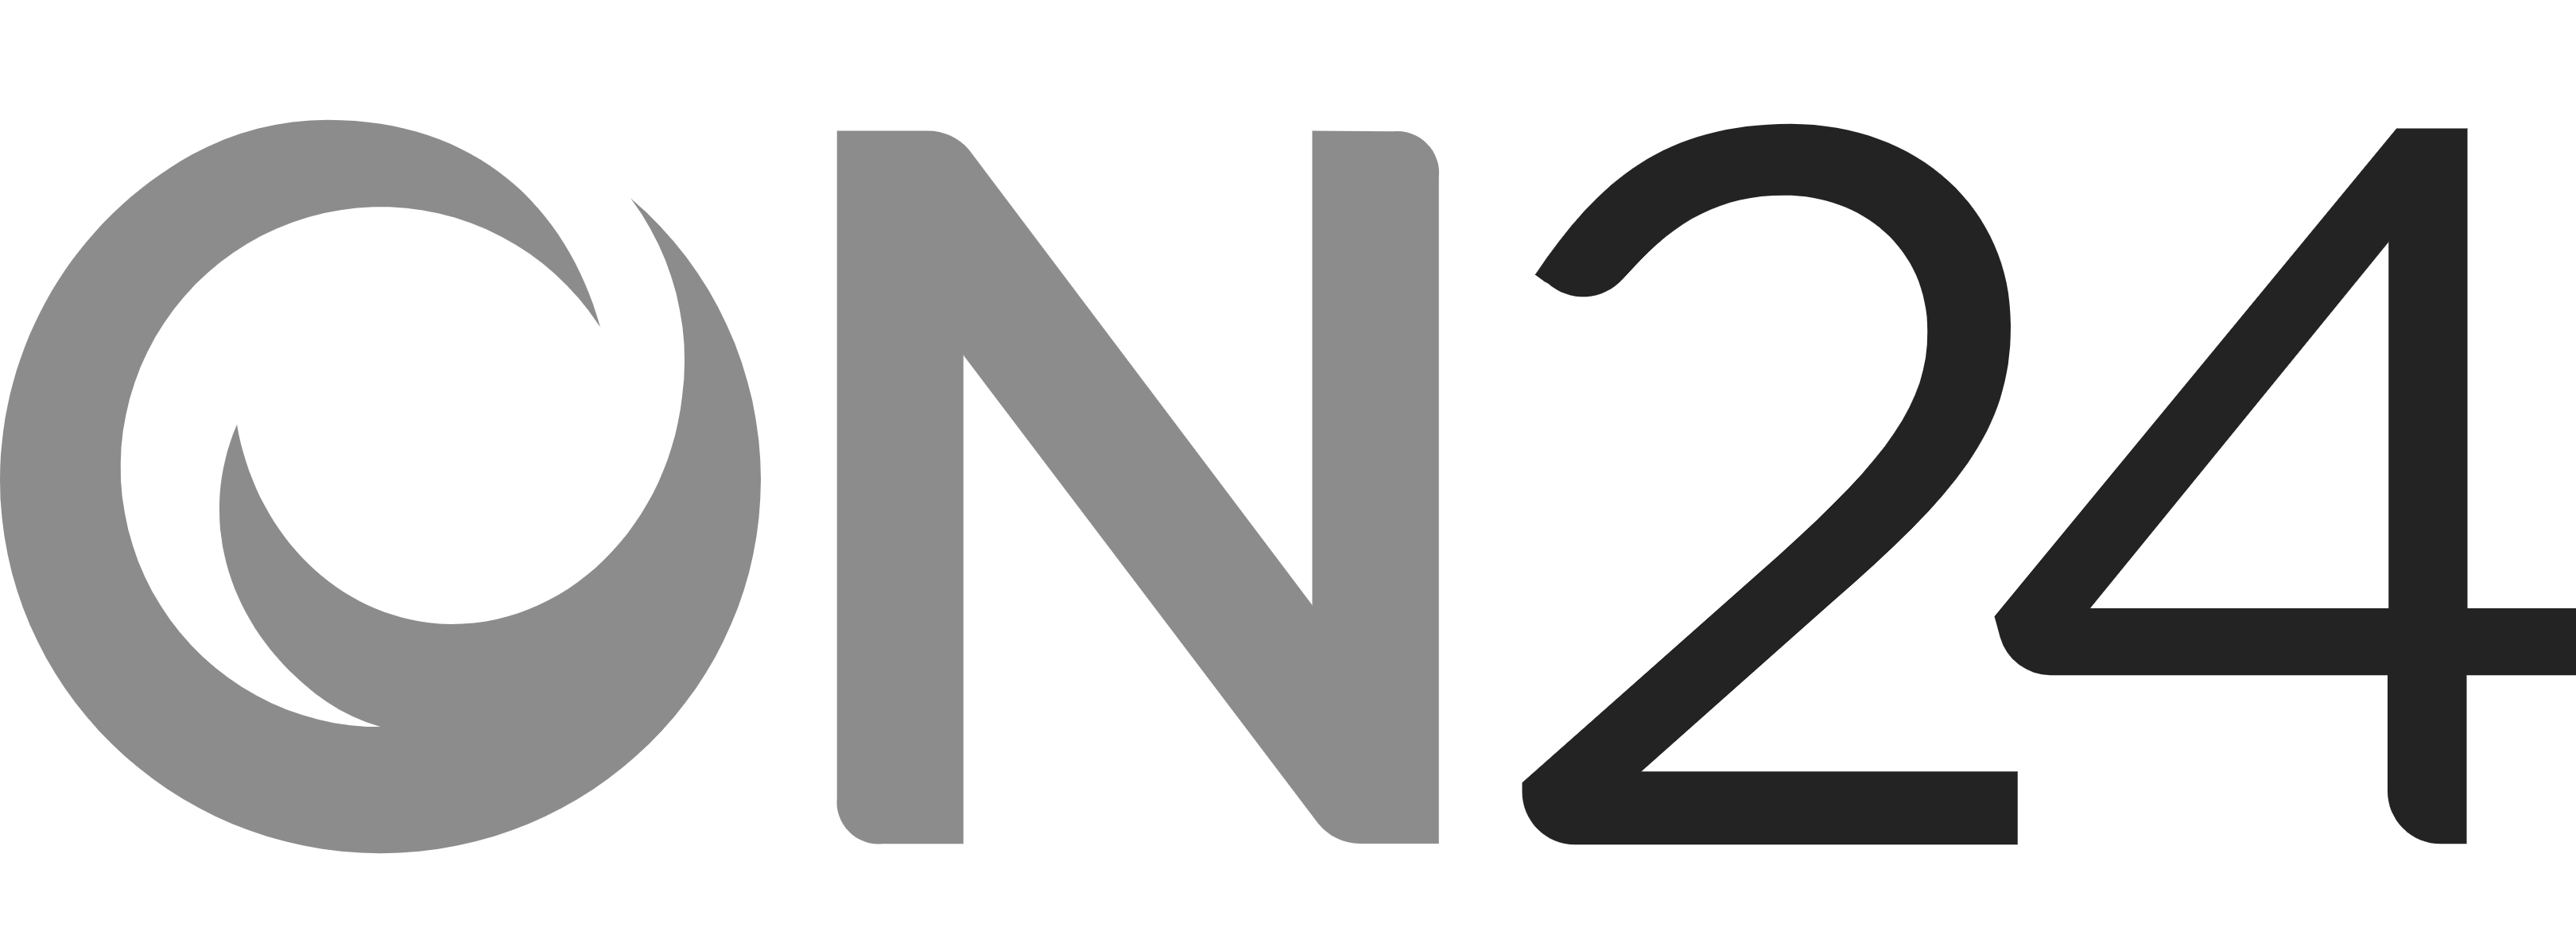 greyscale-logo.png